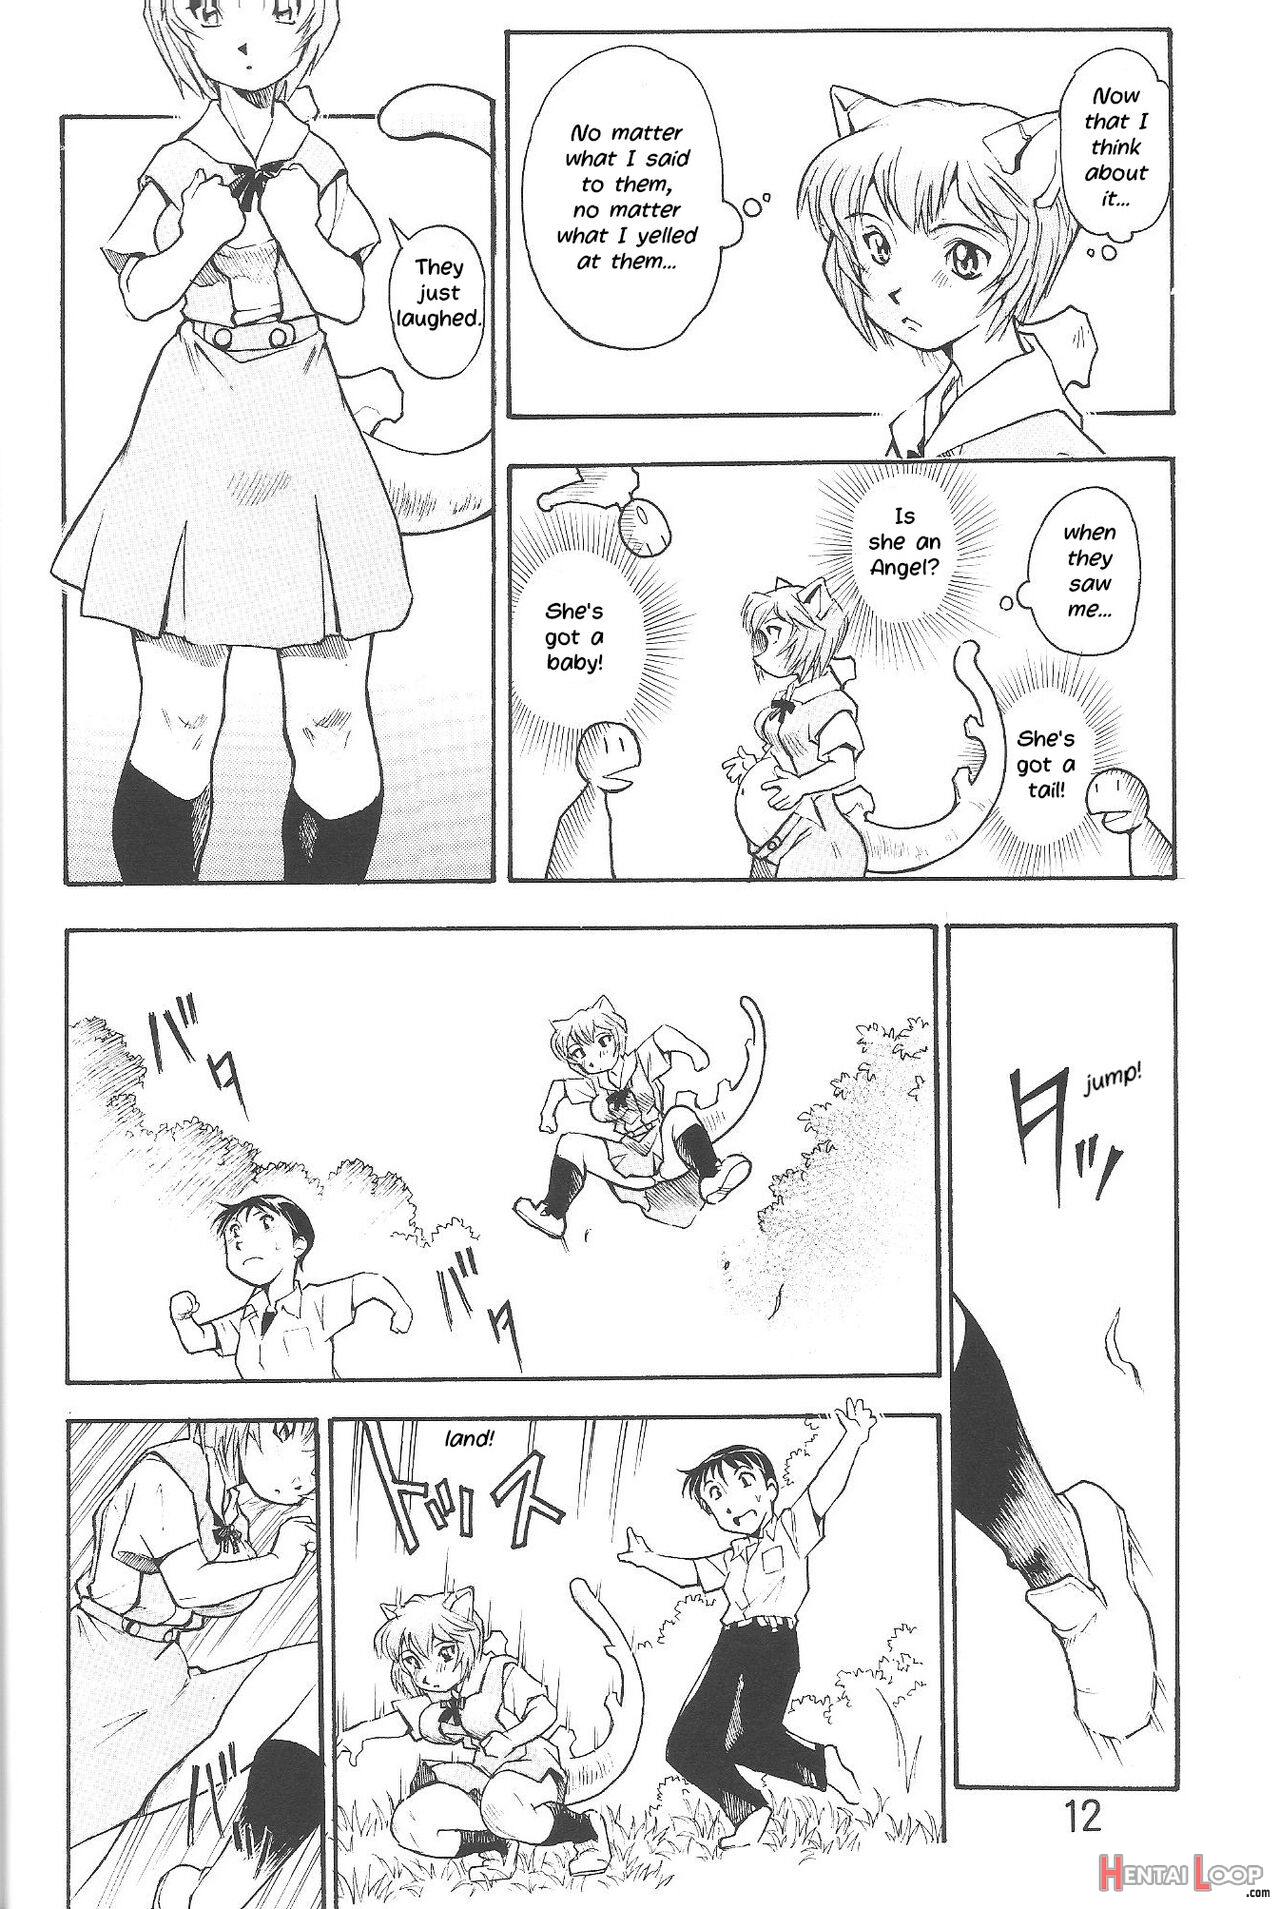 The Harah Angel Ayanami-san page 10